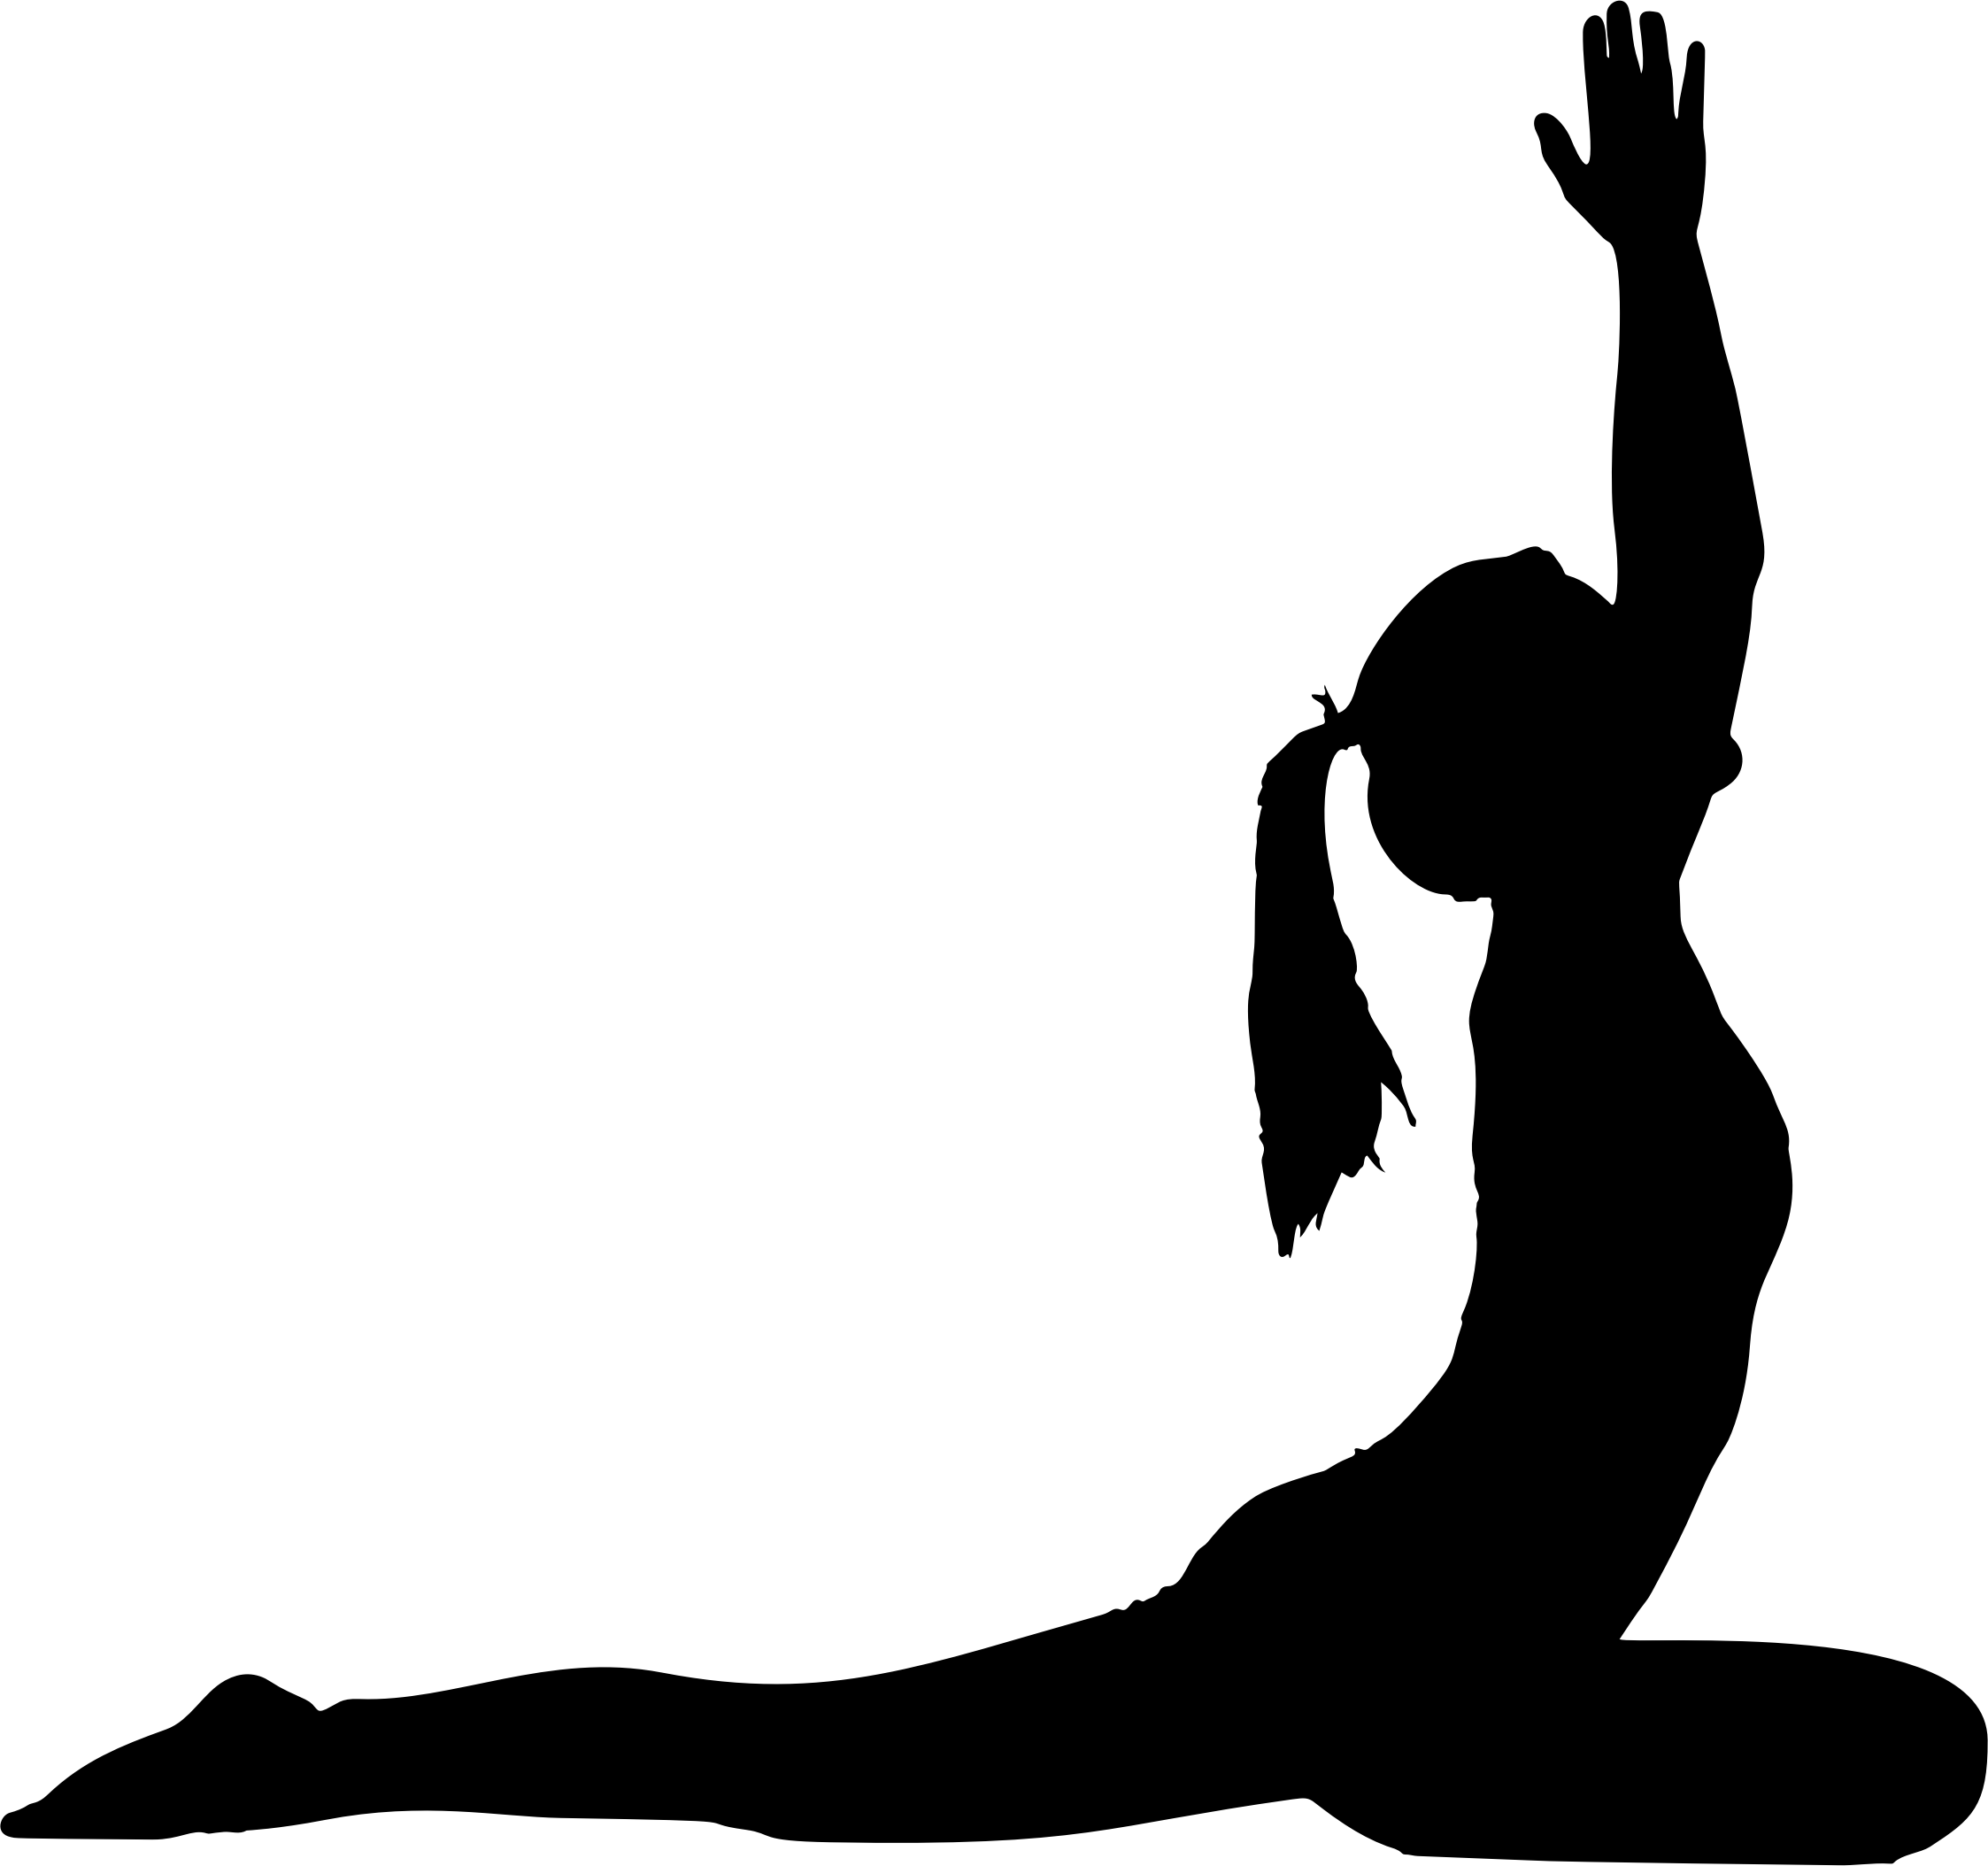 Goddess pose yoga workout silhouette healthy Vector Image